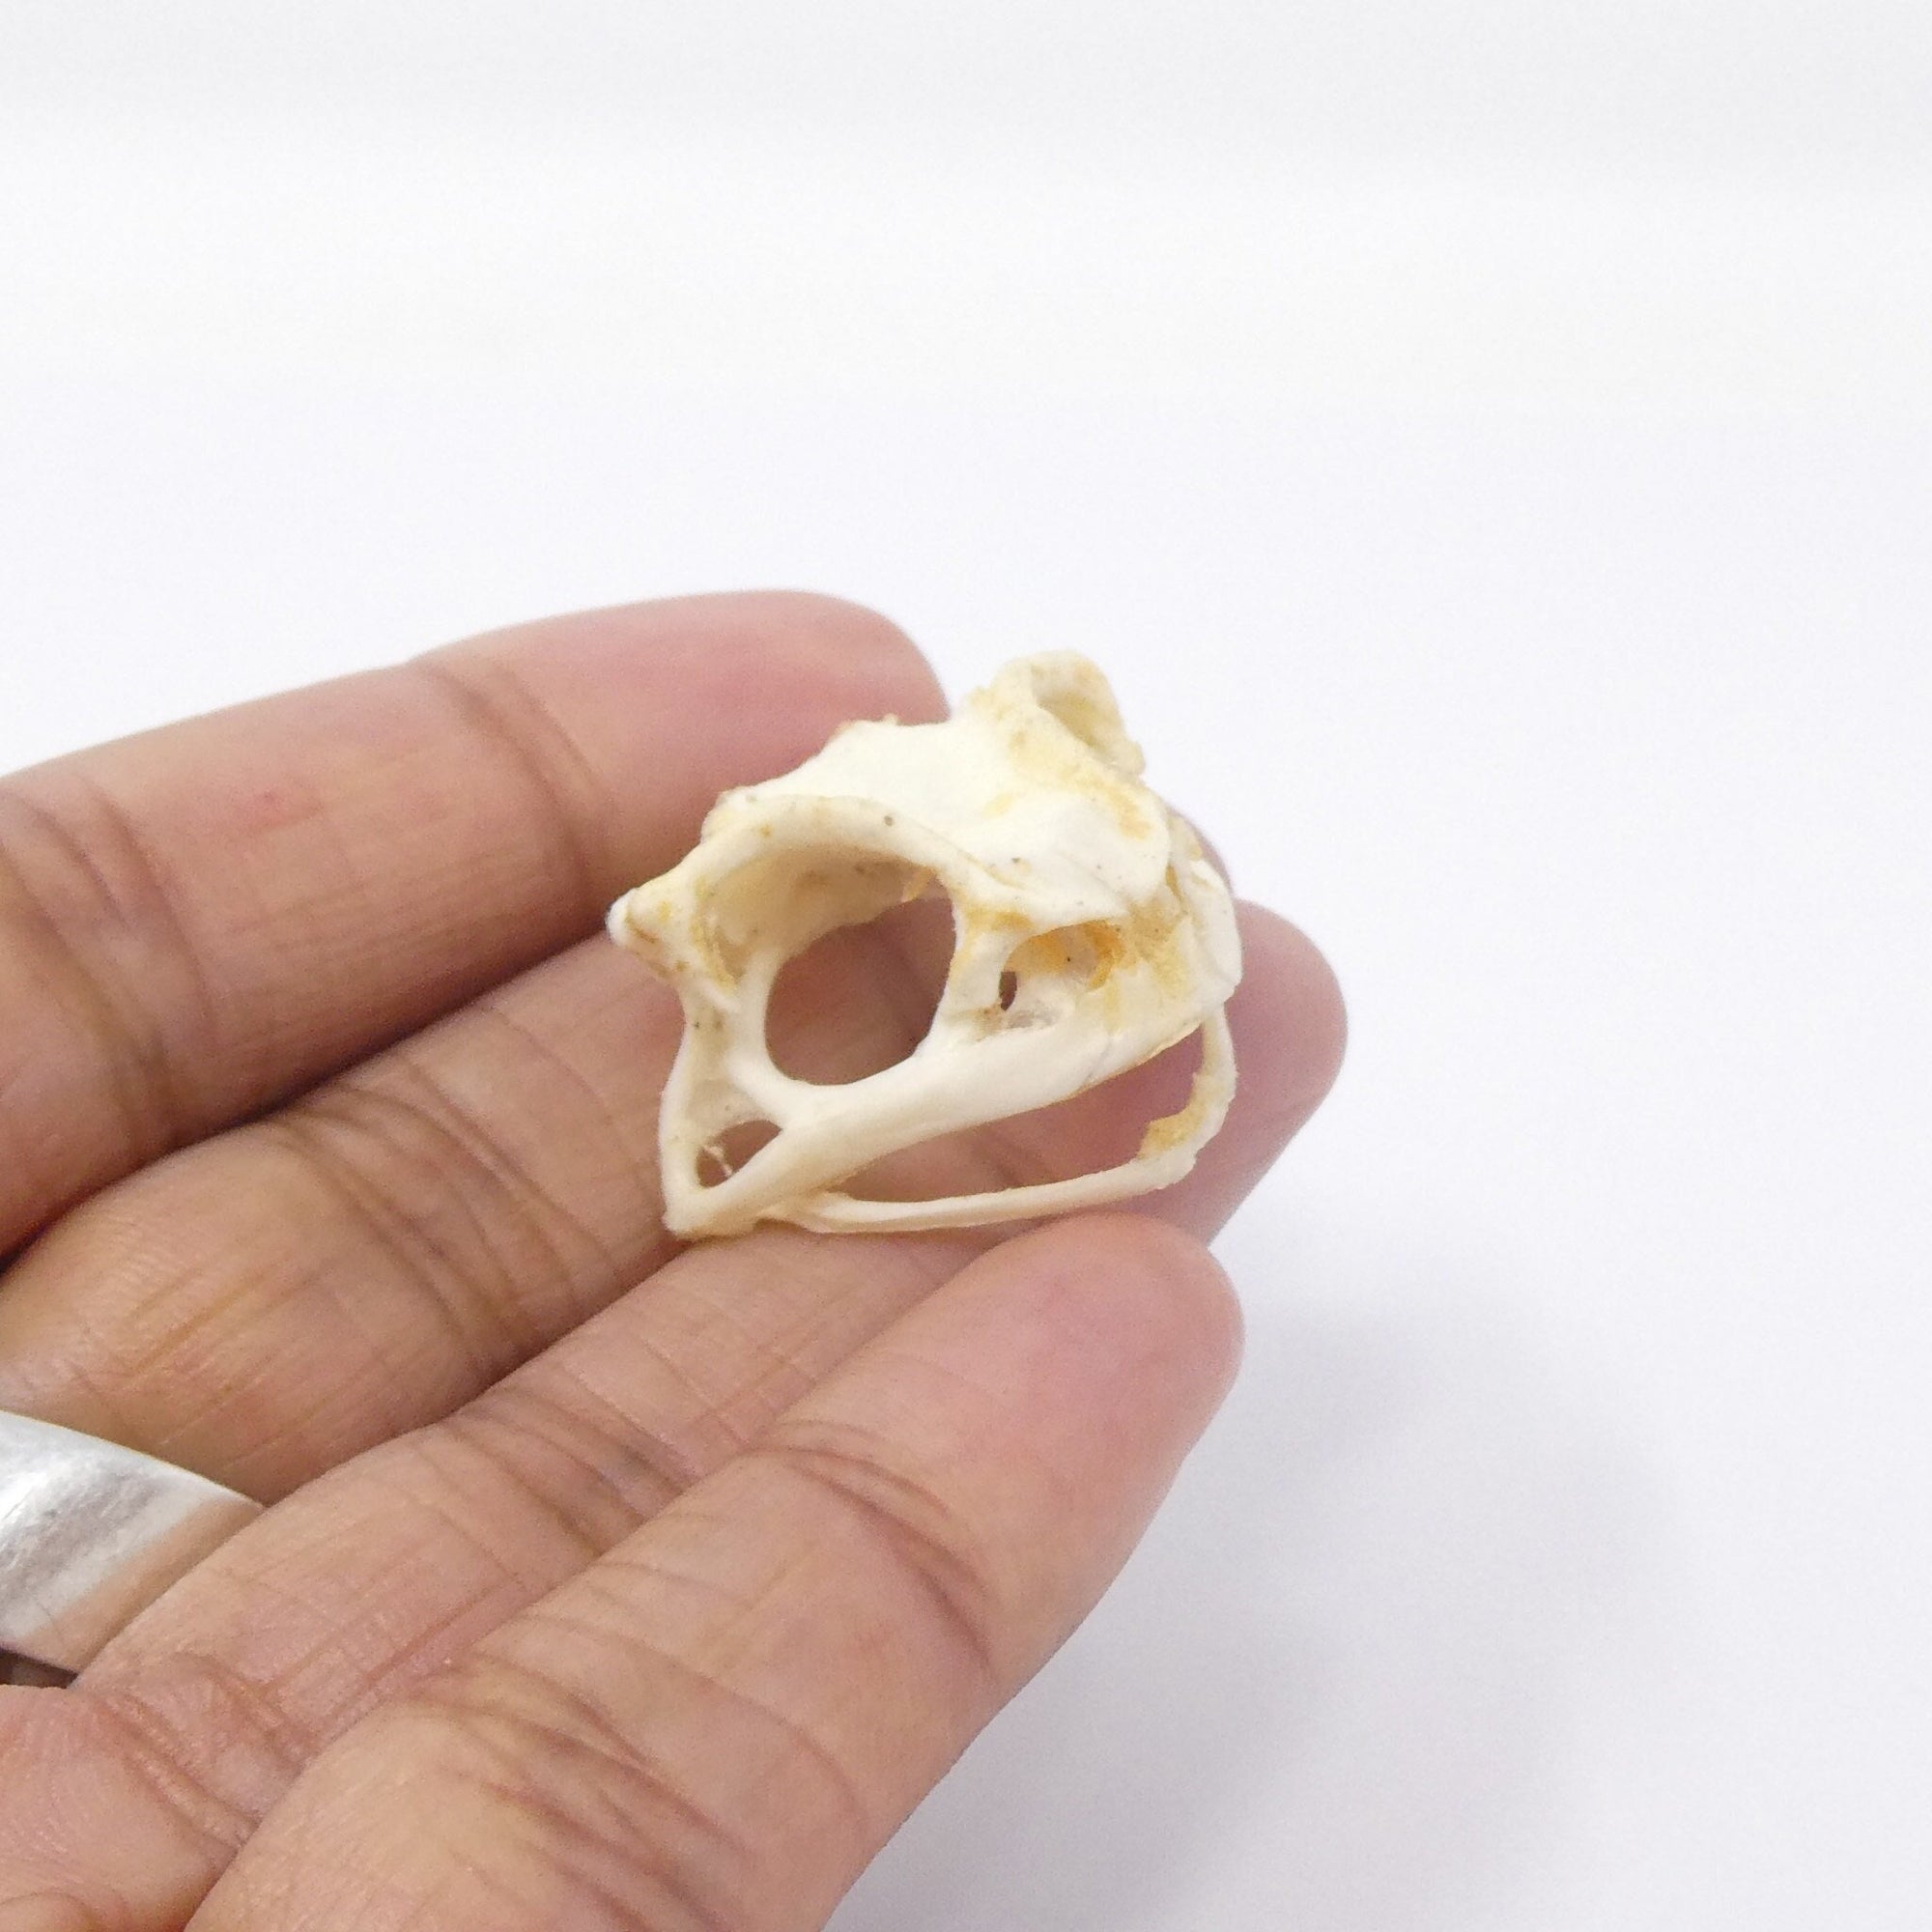 Asian Toad Skull (Duttaphrynus melanostictus) A1 Preserved Skull 25mm (Non-CITES)